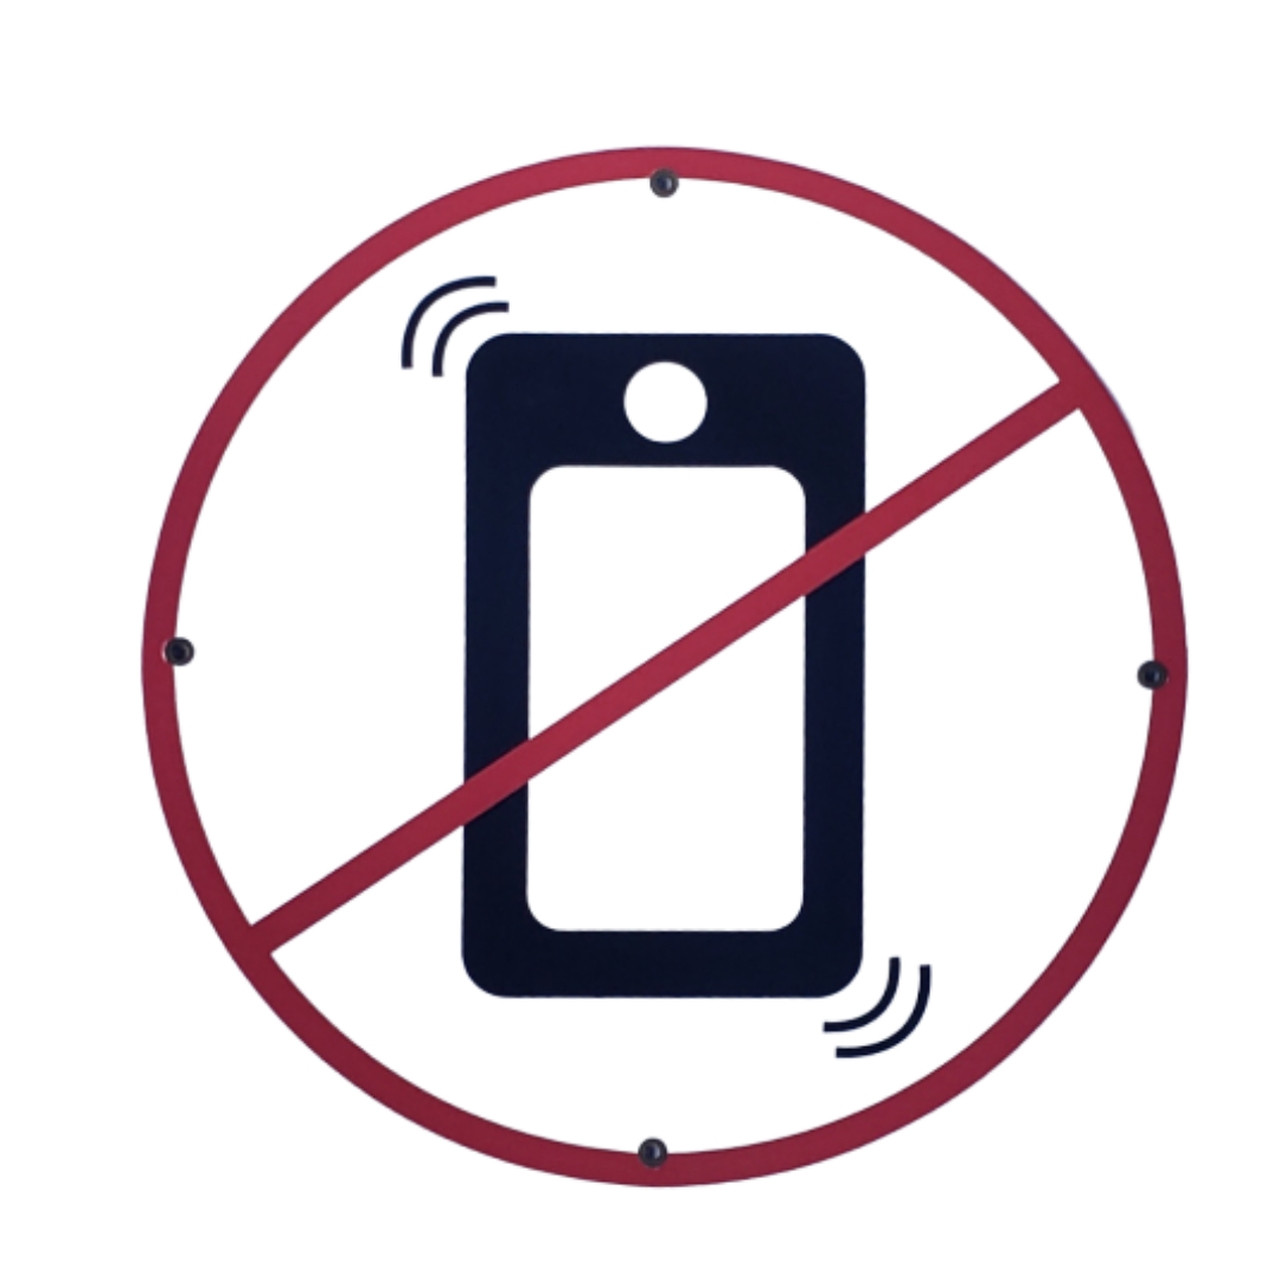 Placa proibido celular